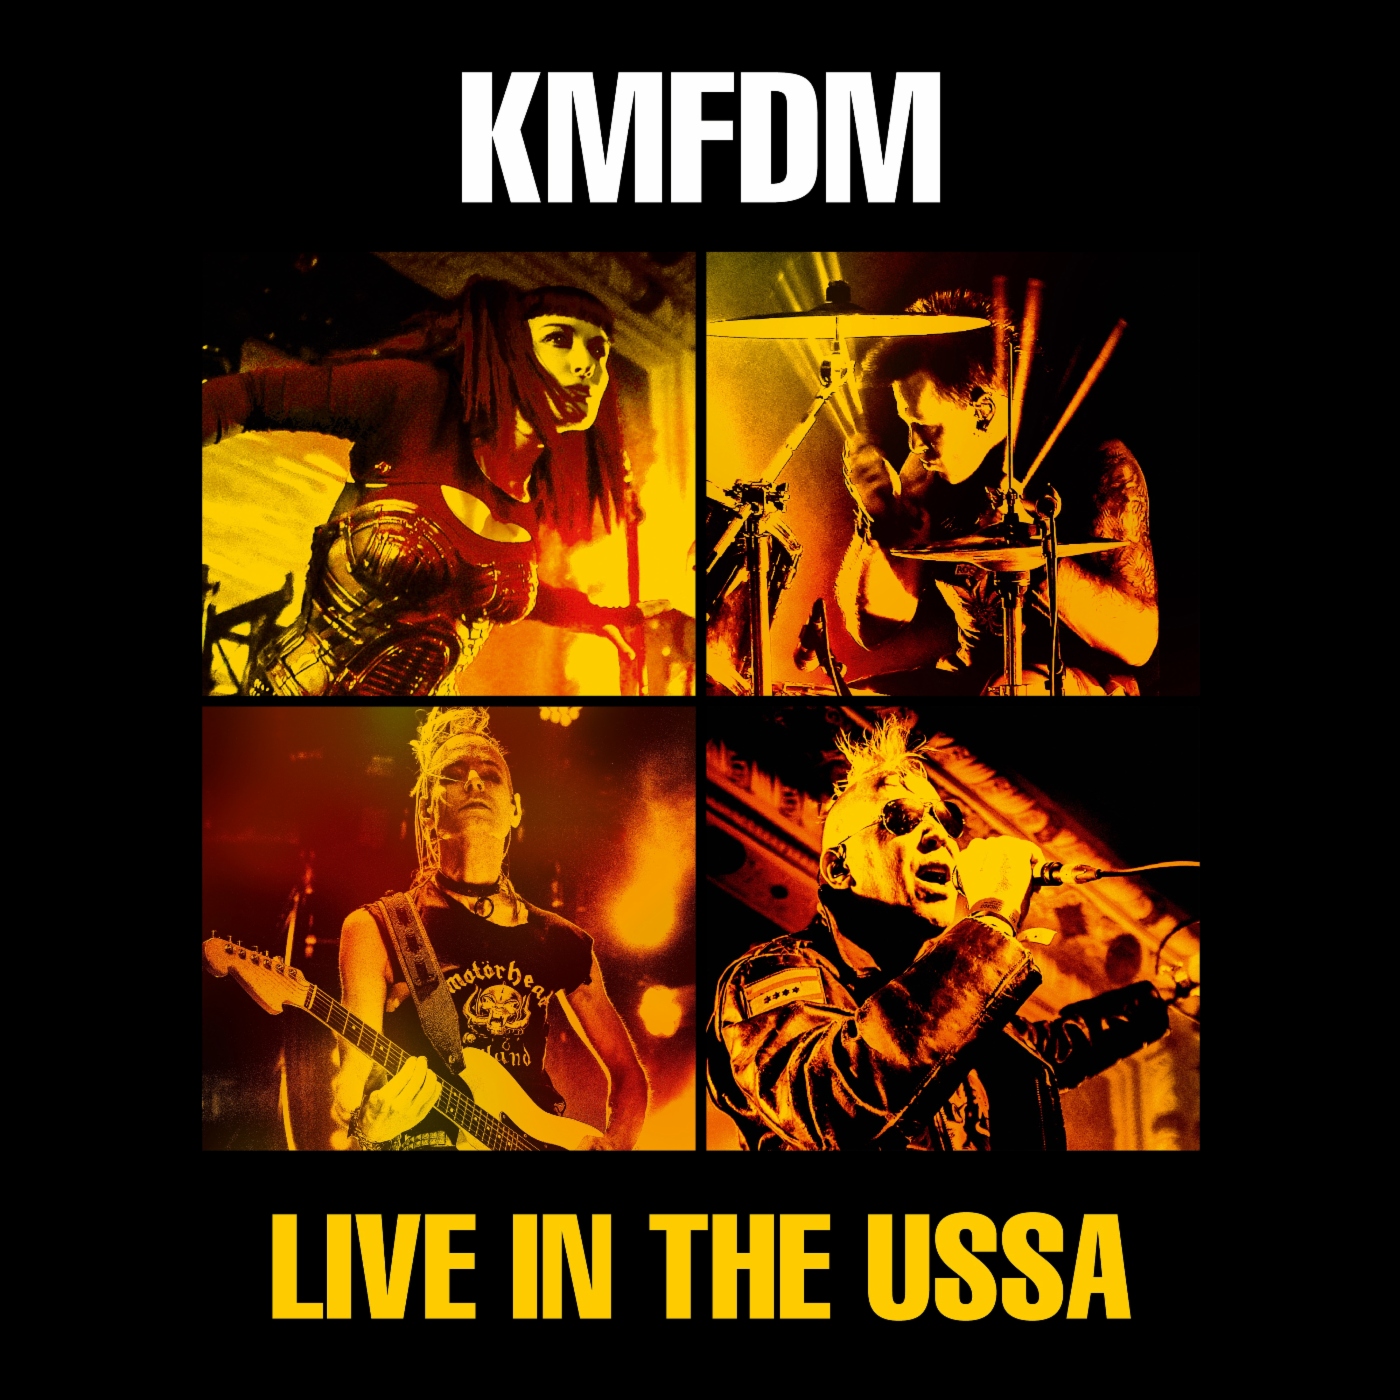 KMFDM - Live in the USSA (2018) Album Info